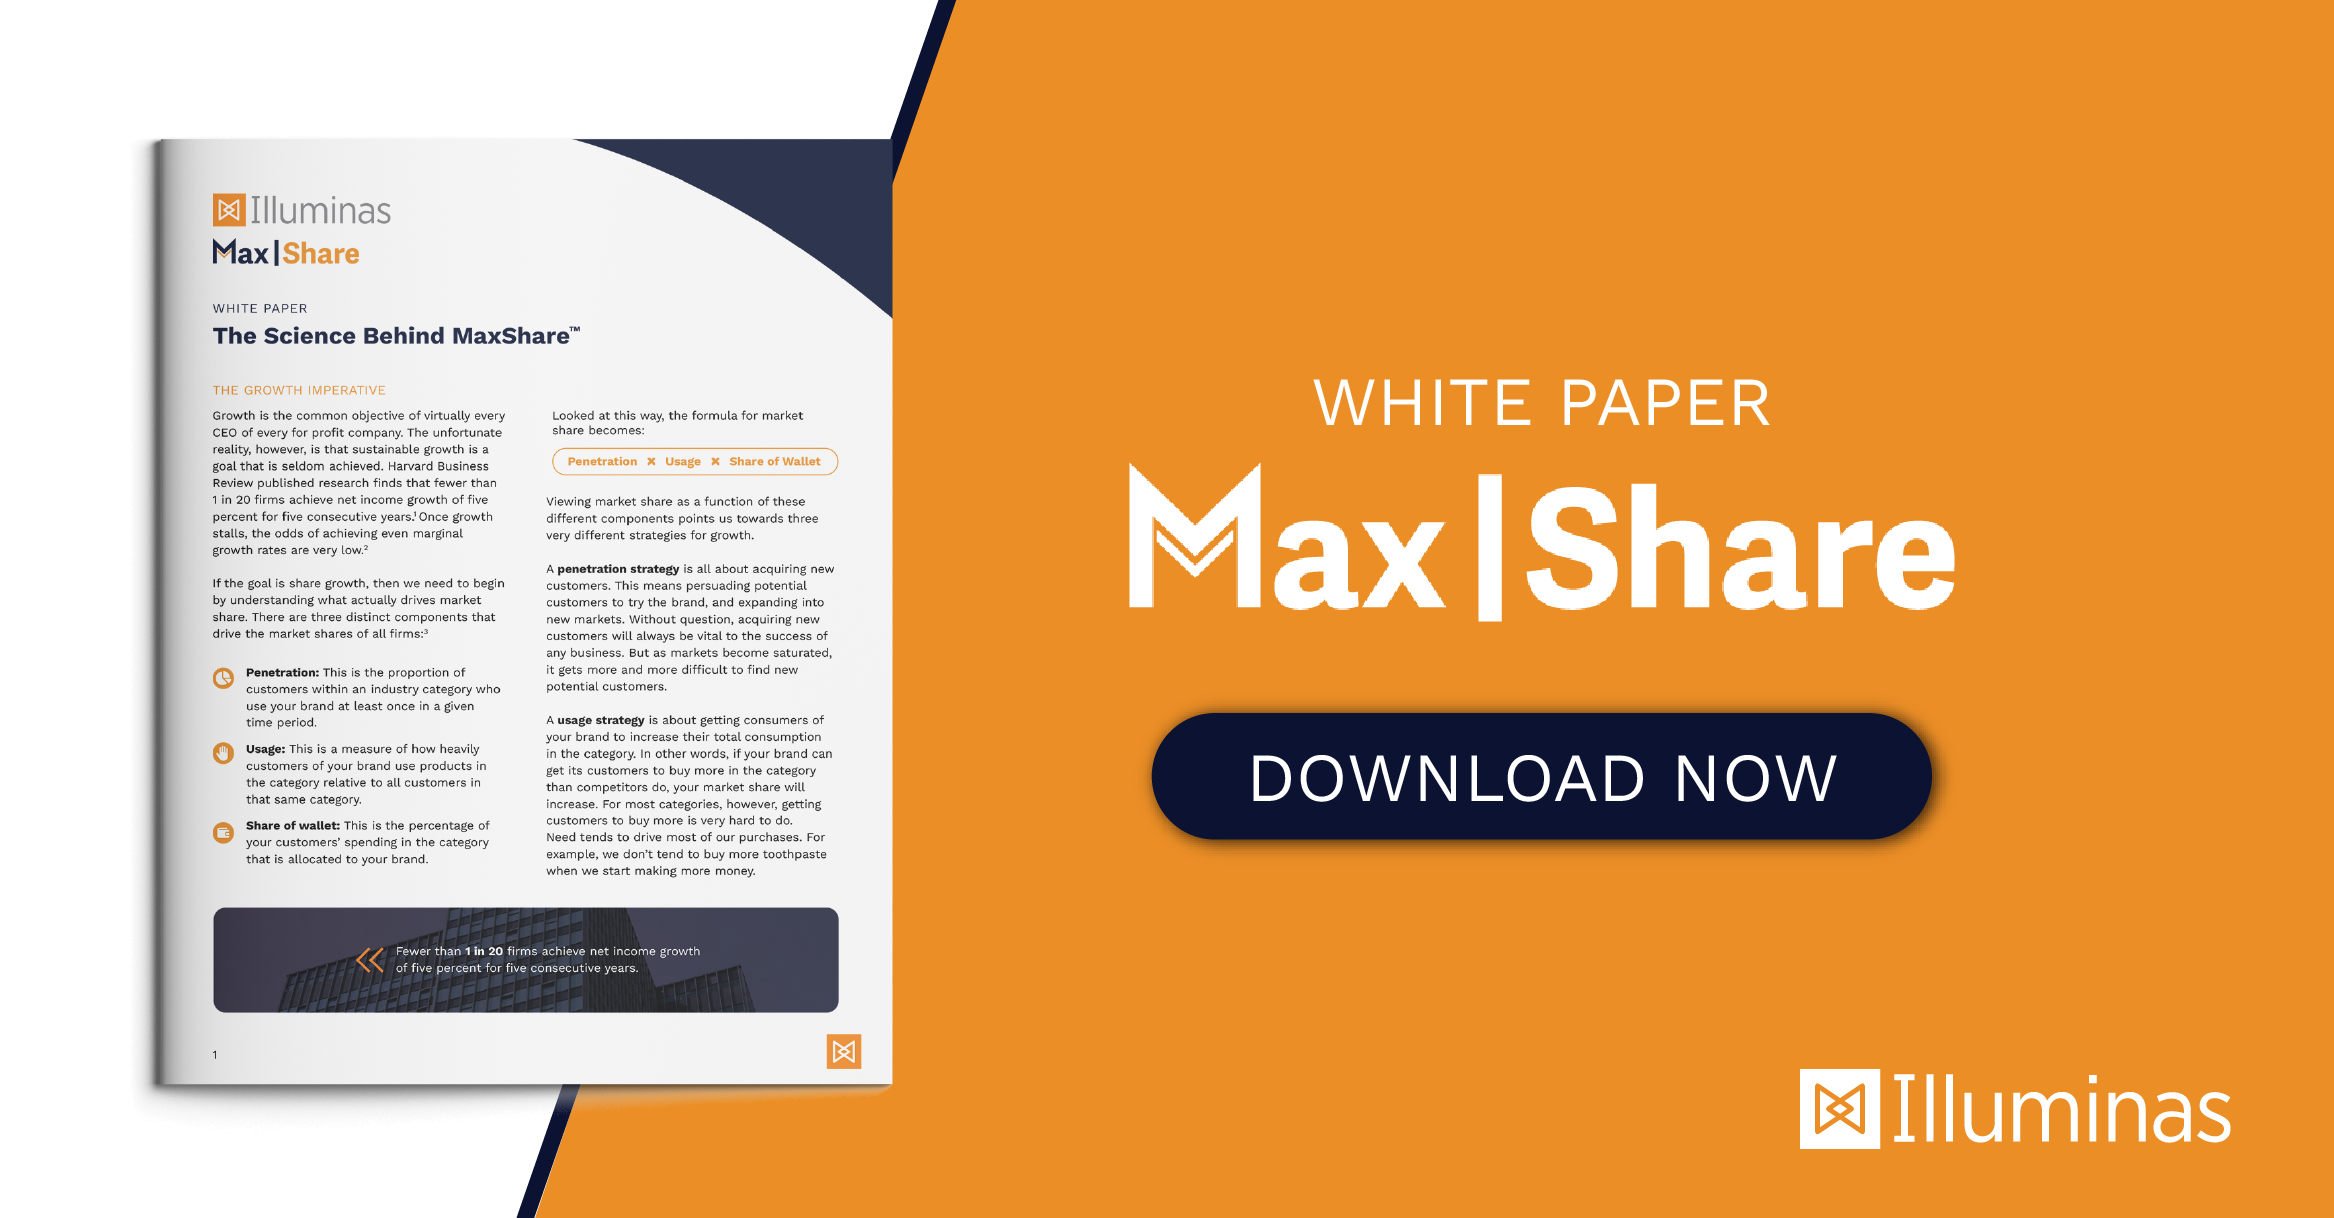 MaxShare white paper cover image